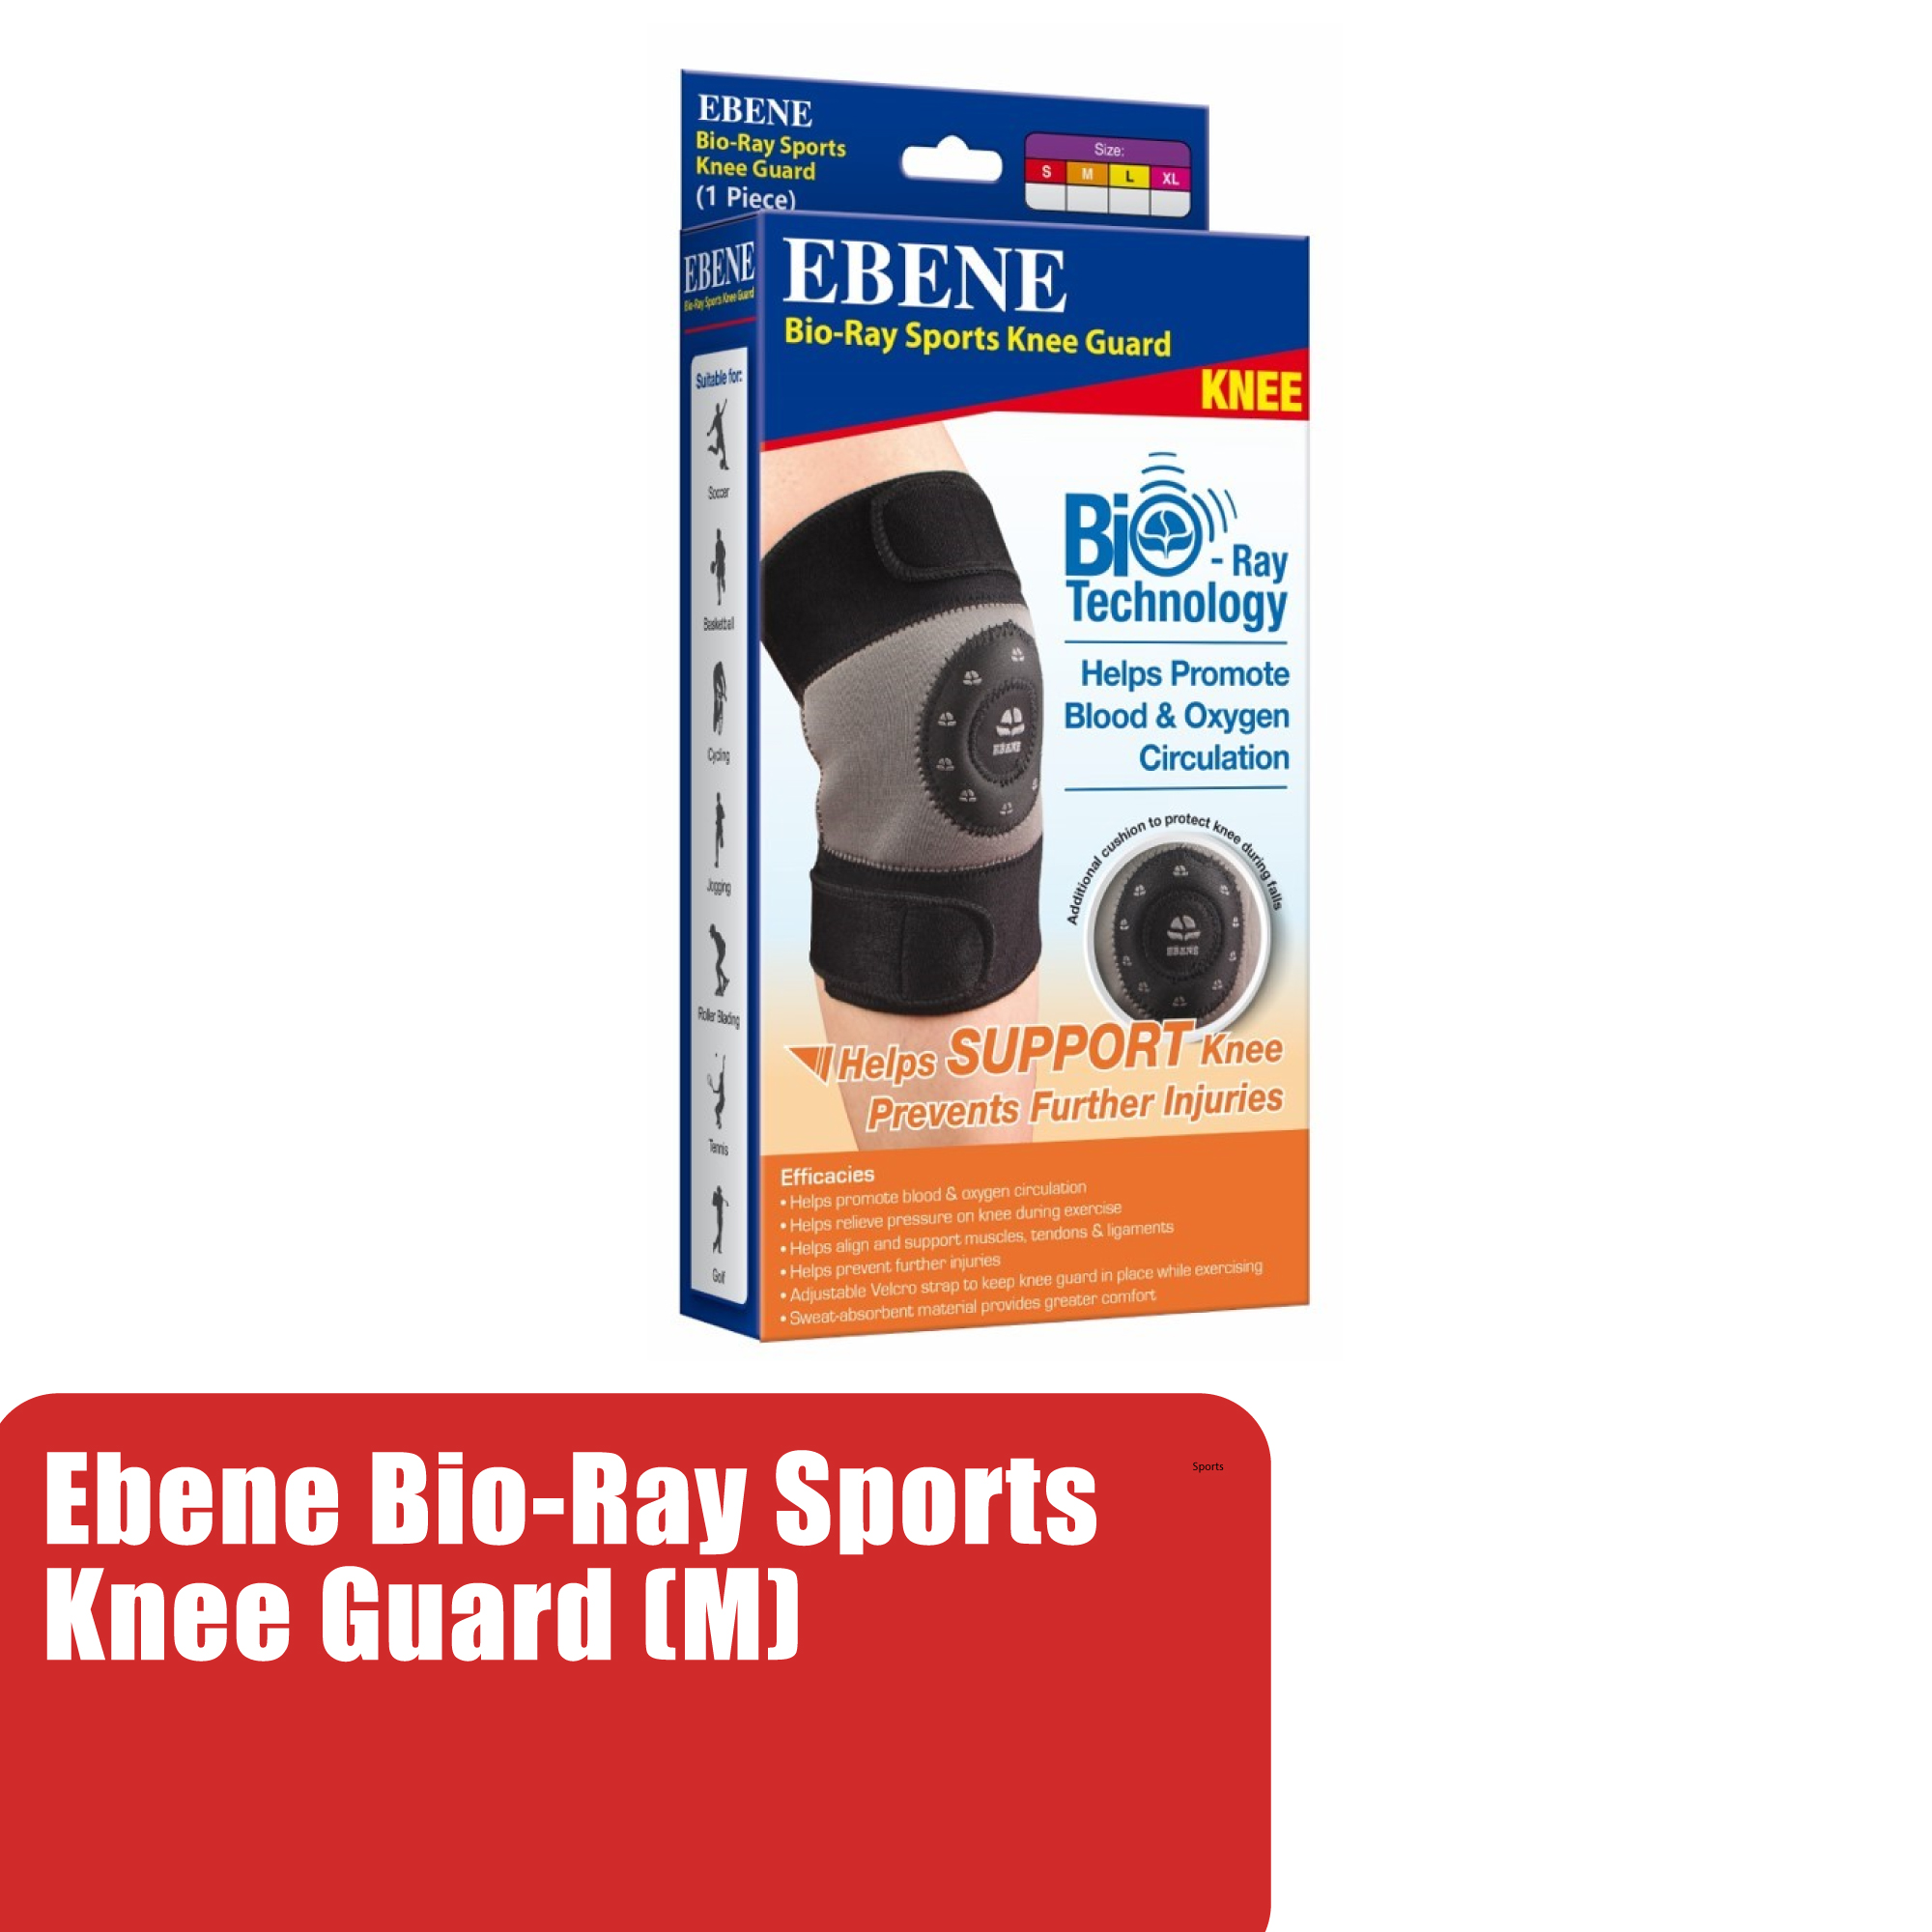 Ebene Bio-Ray Sport Knee Guard - M size